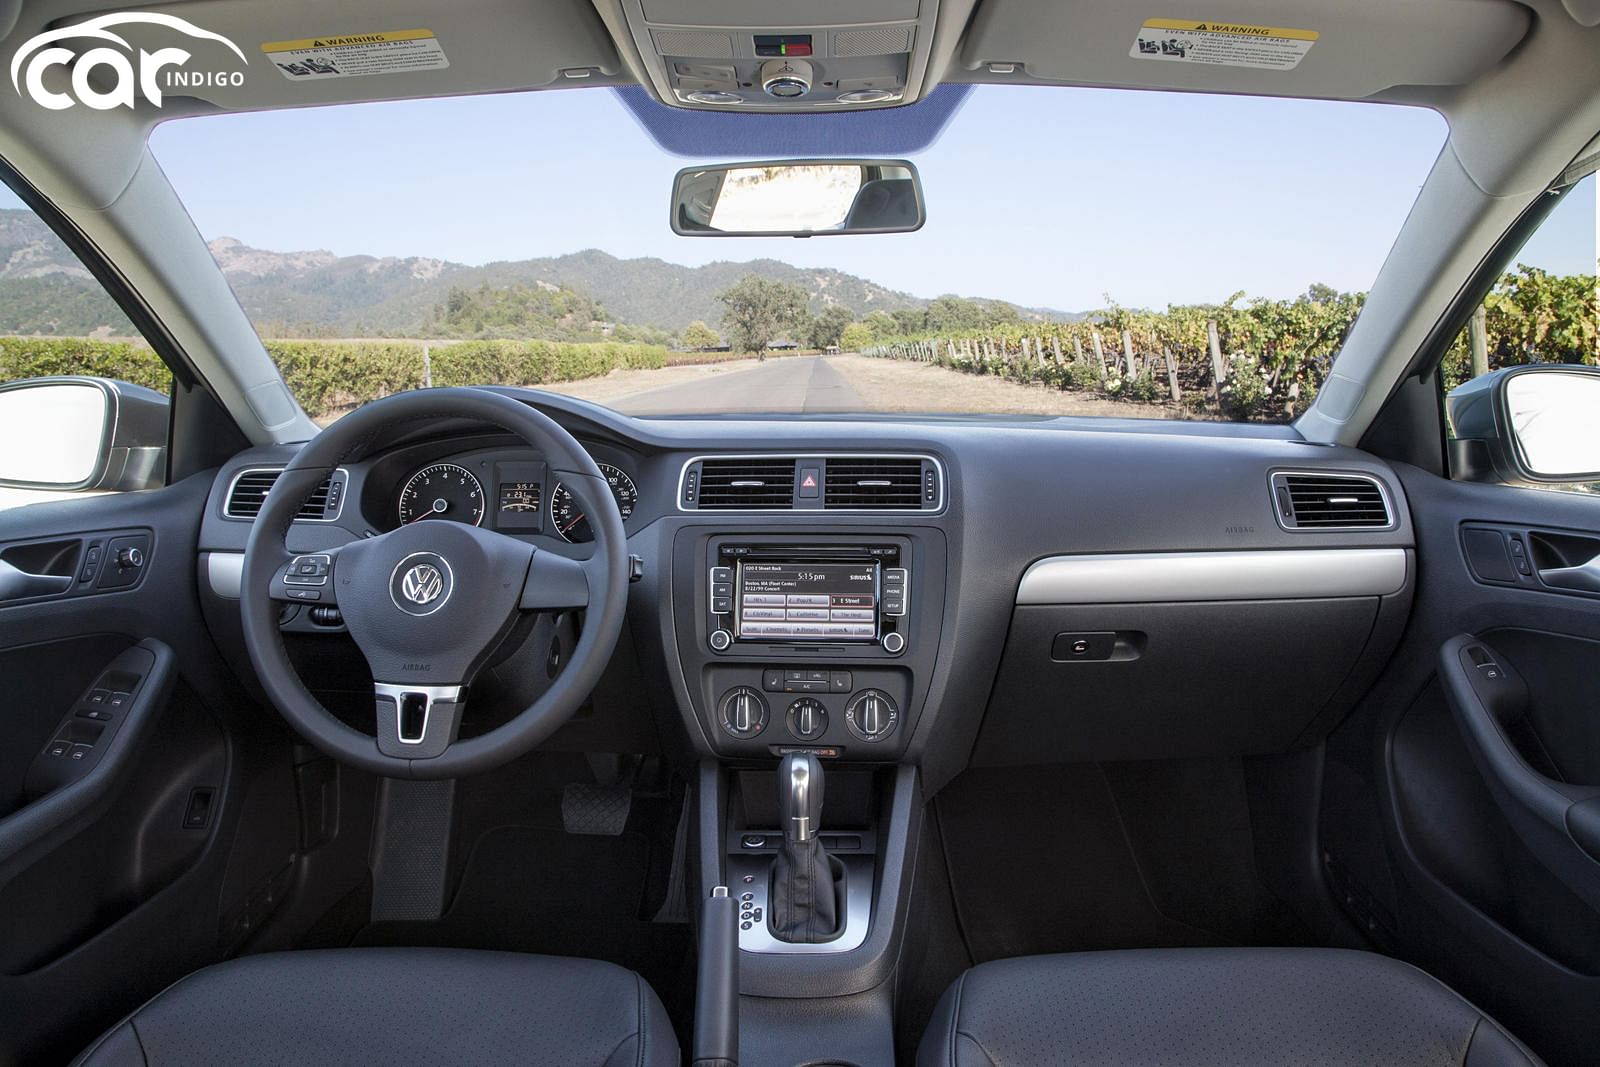 2013 Volkswagen Jetta Interior Review - Seating, Infotainment, Dashboard  and Features | CarIndigo.com